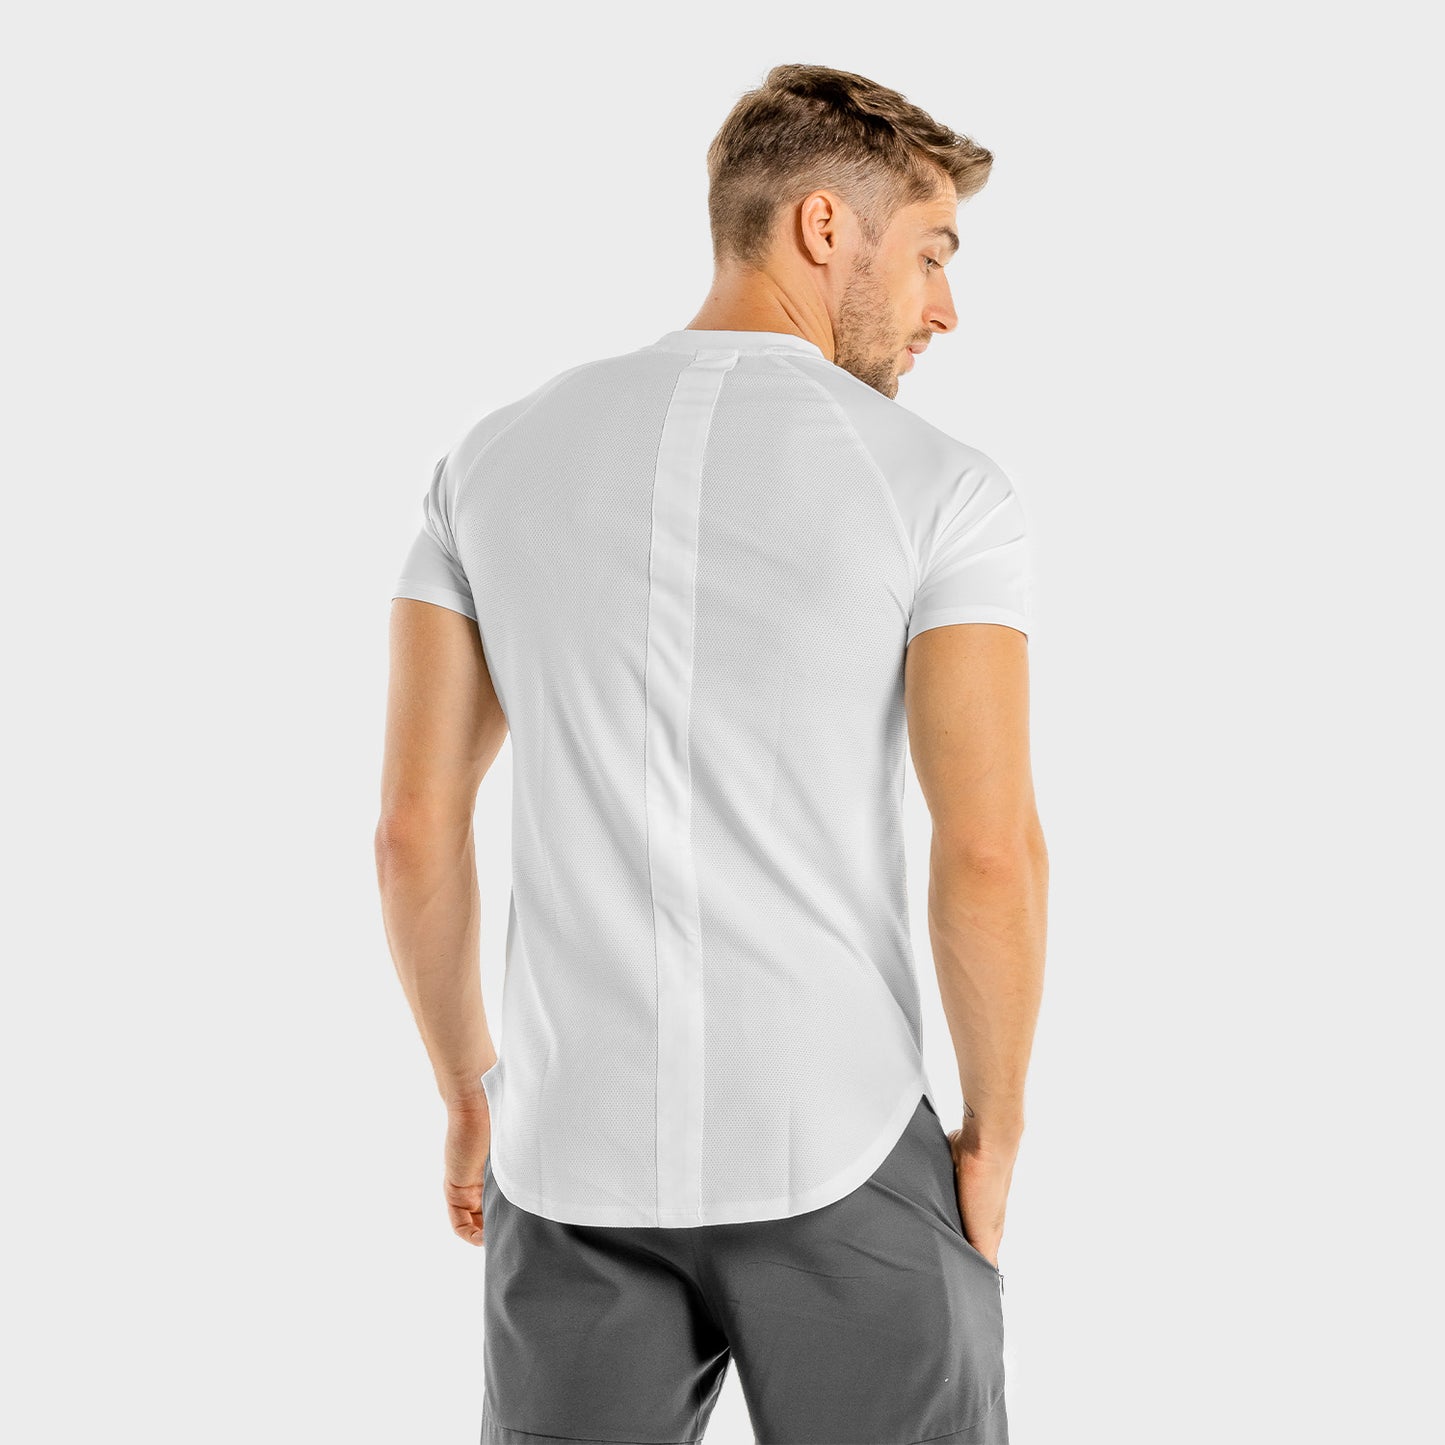 squatwolf-gym-wear-limitless-razor-tee-white-workout-shirts-for-men